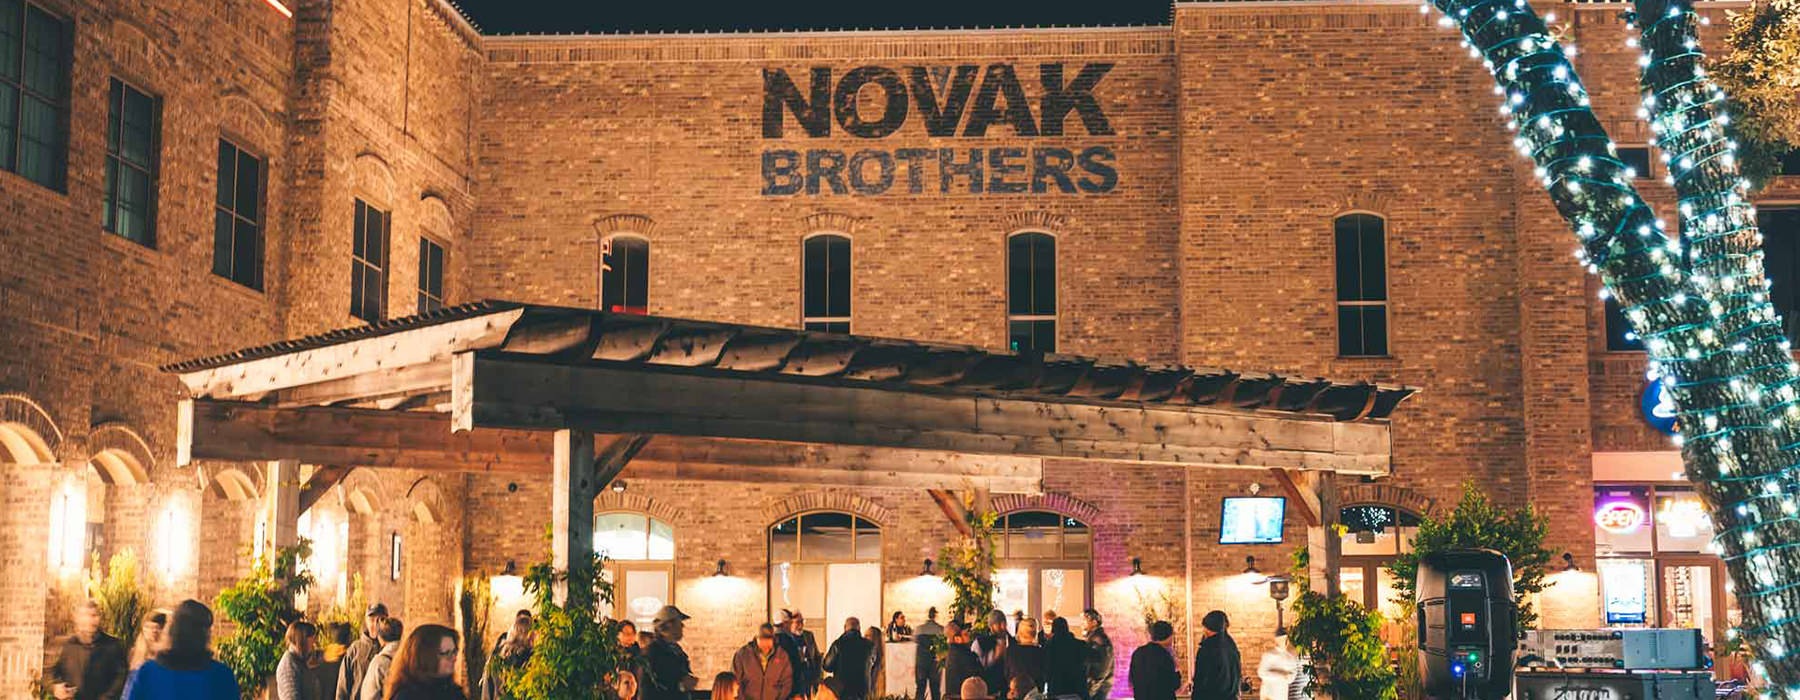 Local restaurant Novak